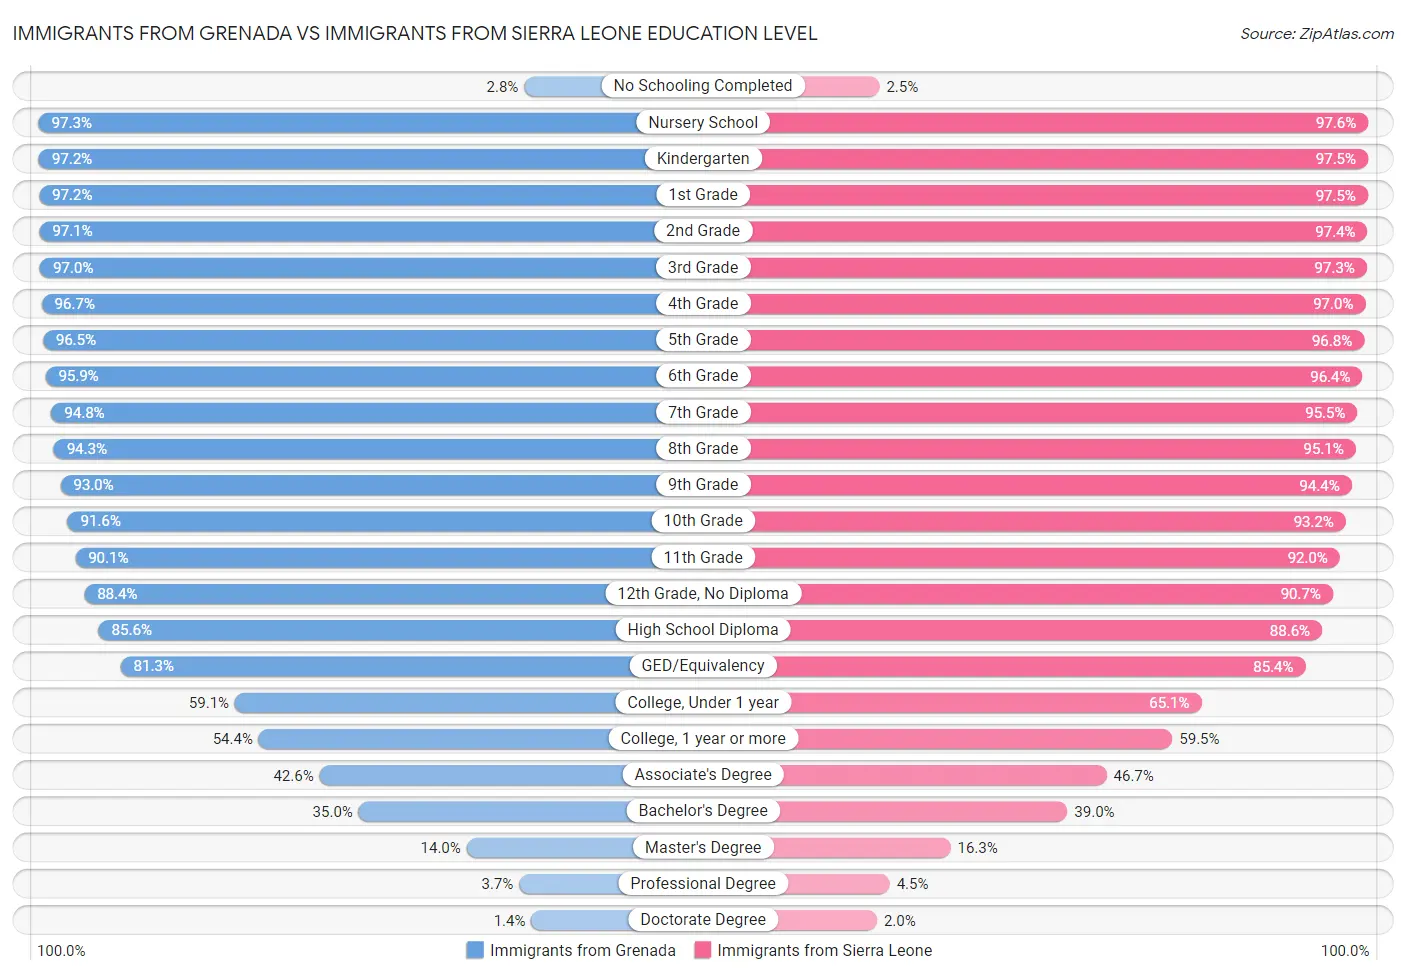 Immigrants from Grenada vs Immigrants from Sierra Leone Education Level